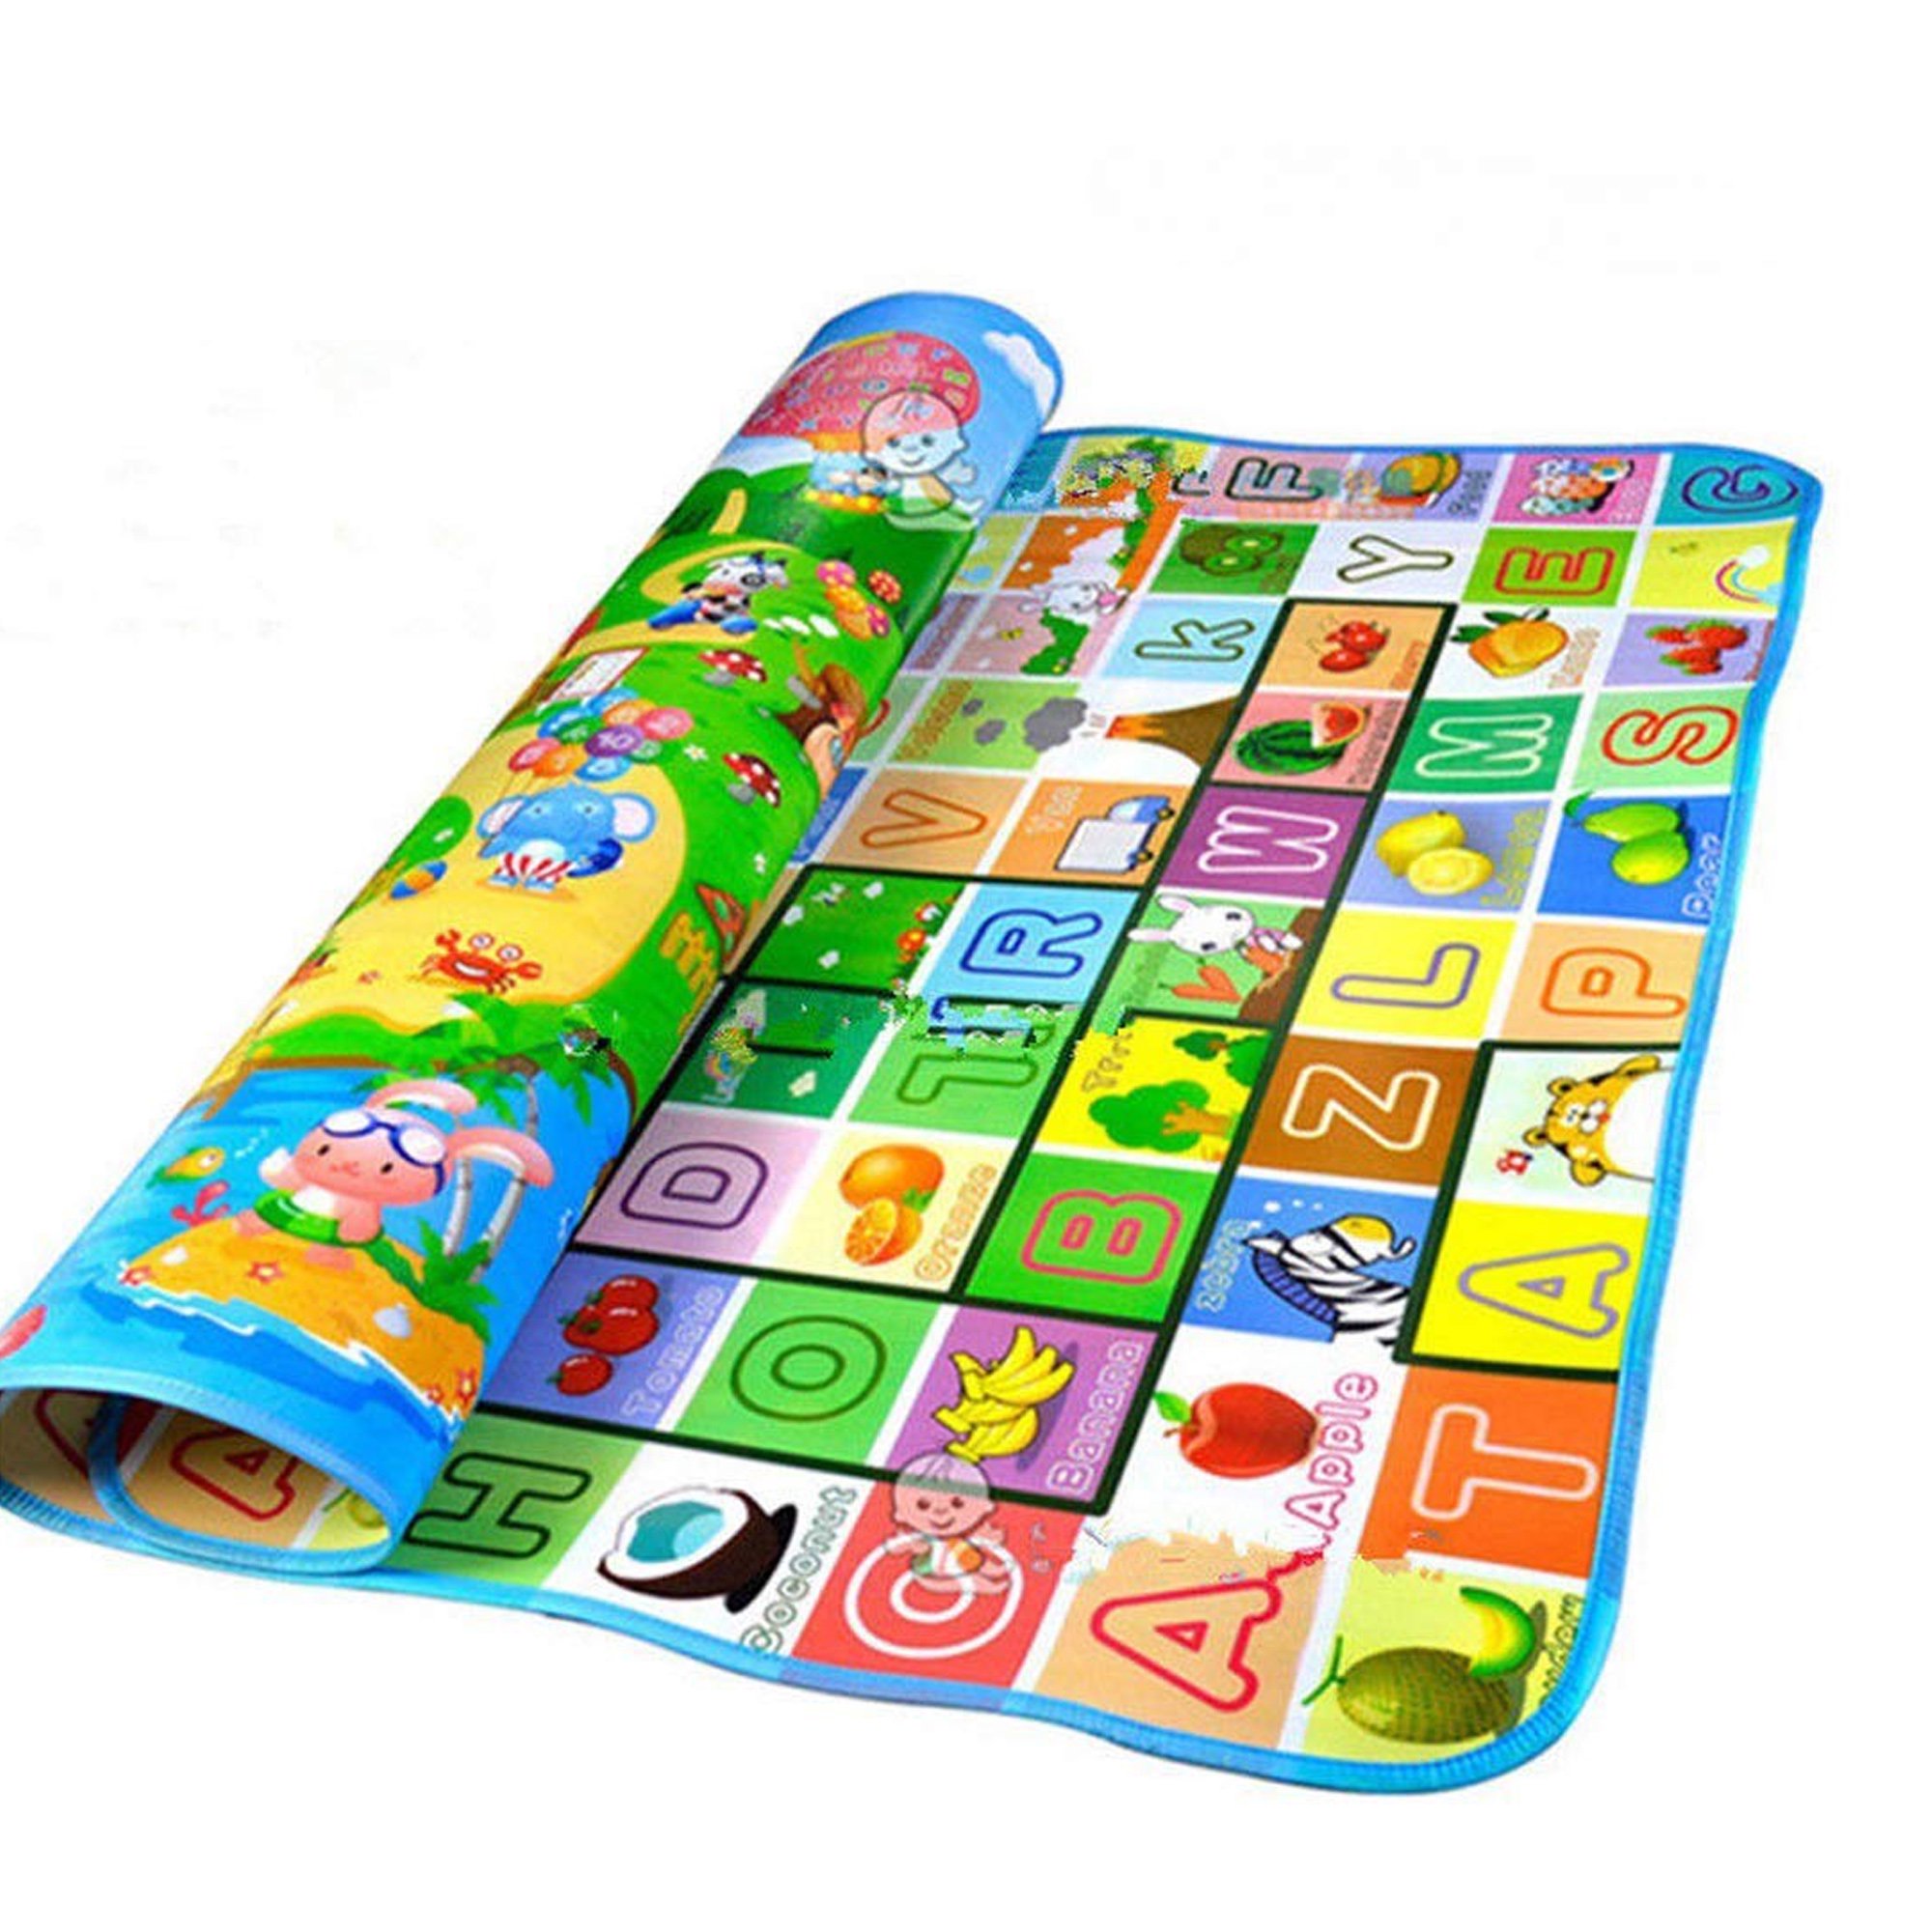 Musuos Baby Crawling Play Mat Kids Children Toddlers Floor Game PlayMat - image 2 of 6